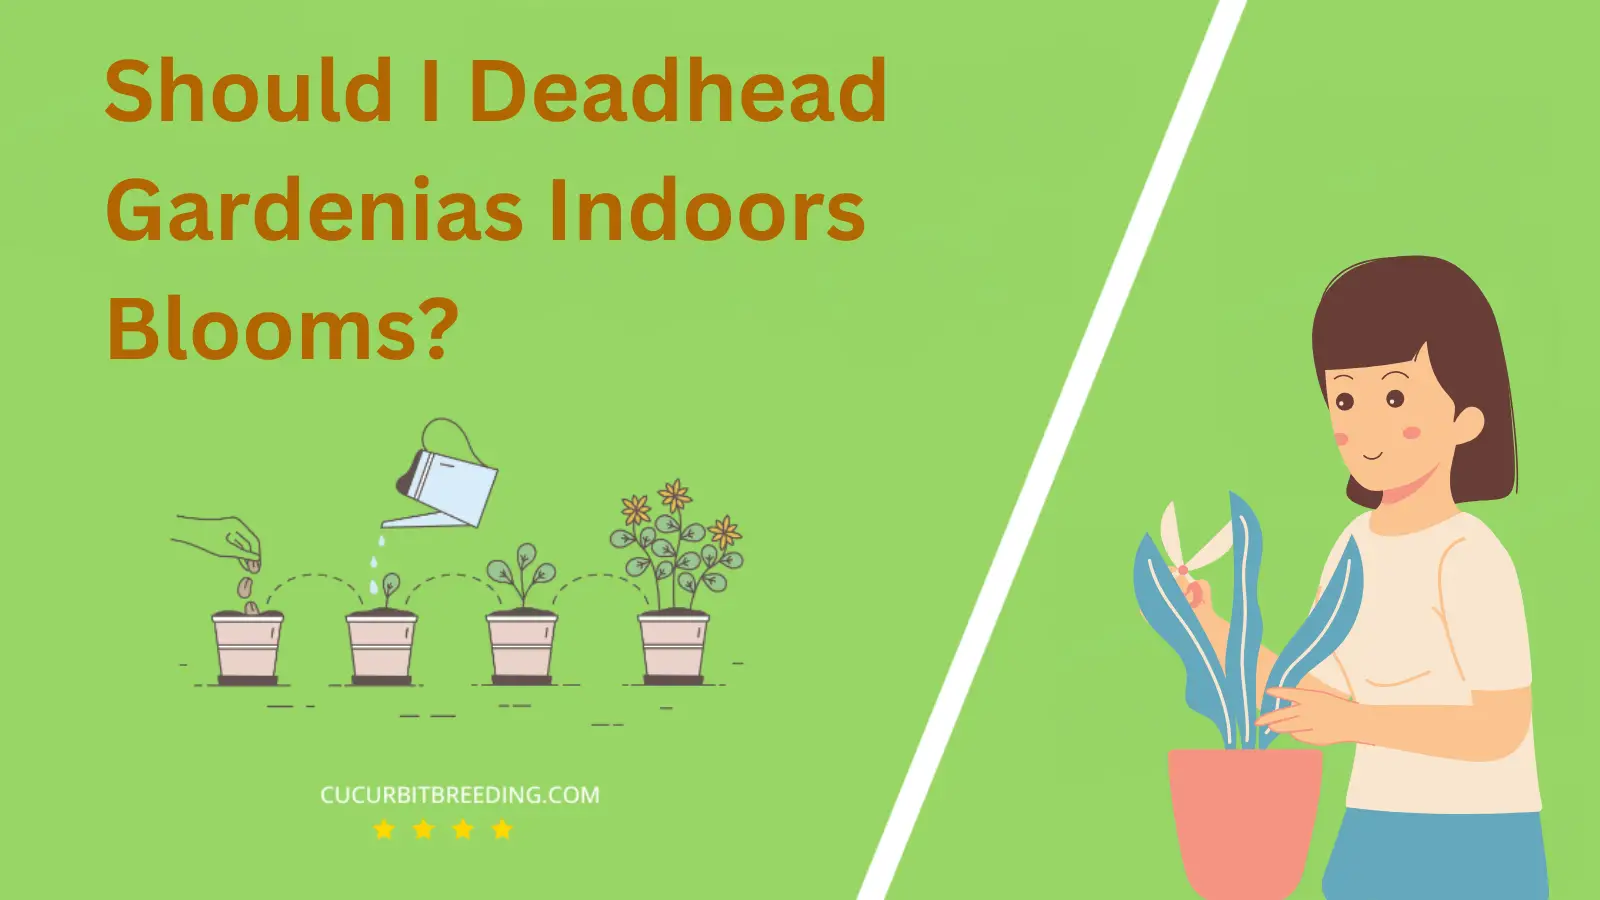 Should I Deadhead Gardenias Indoors Blooms?